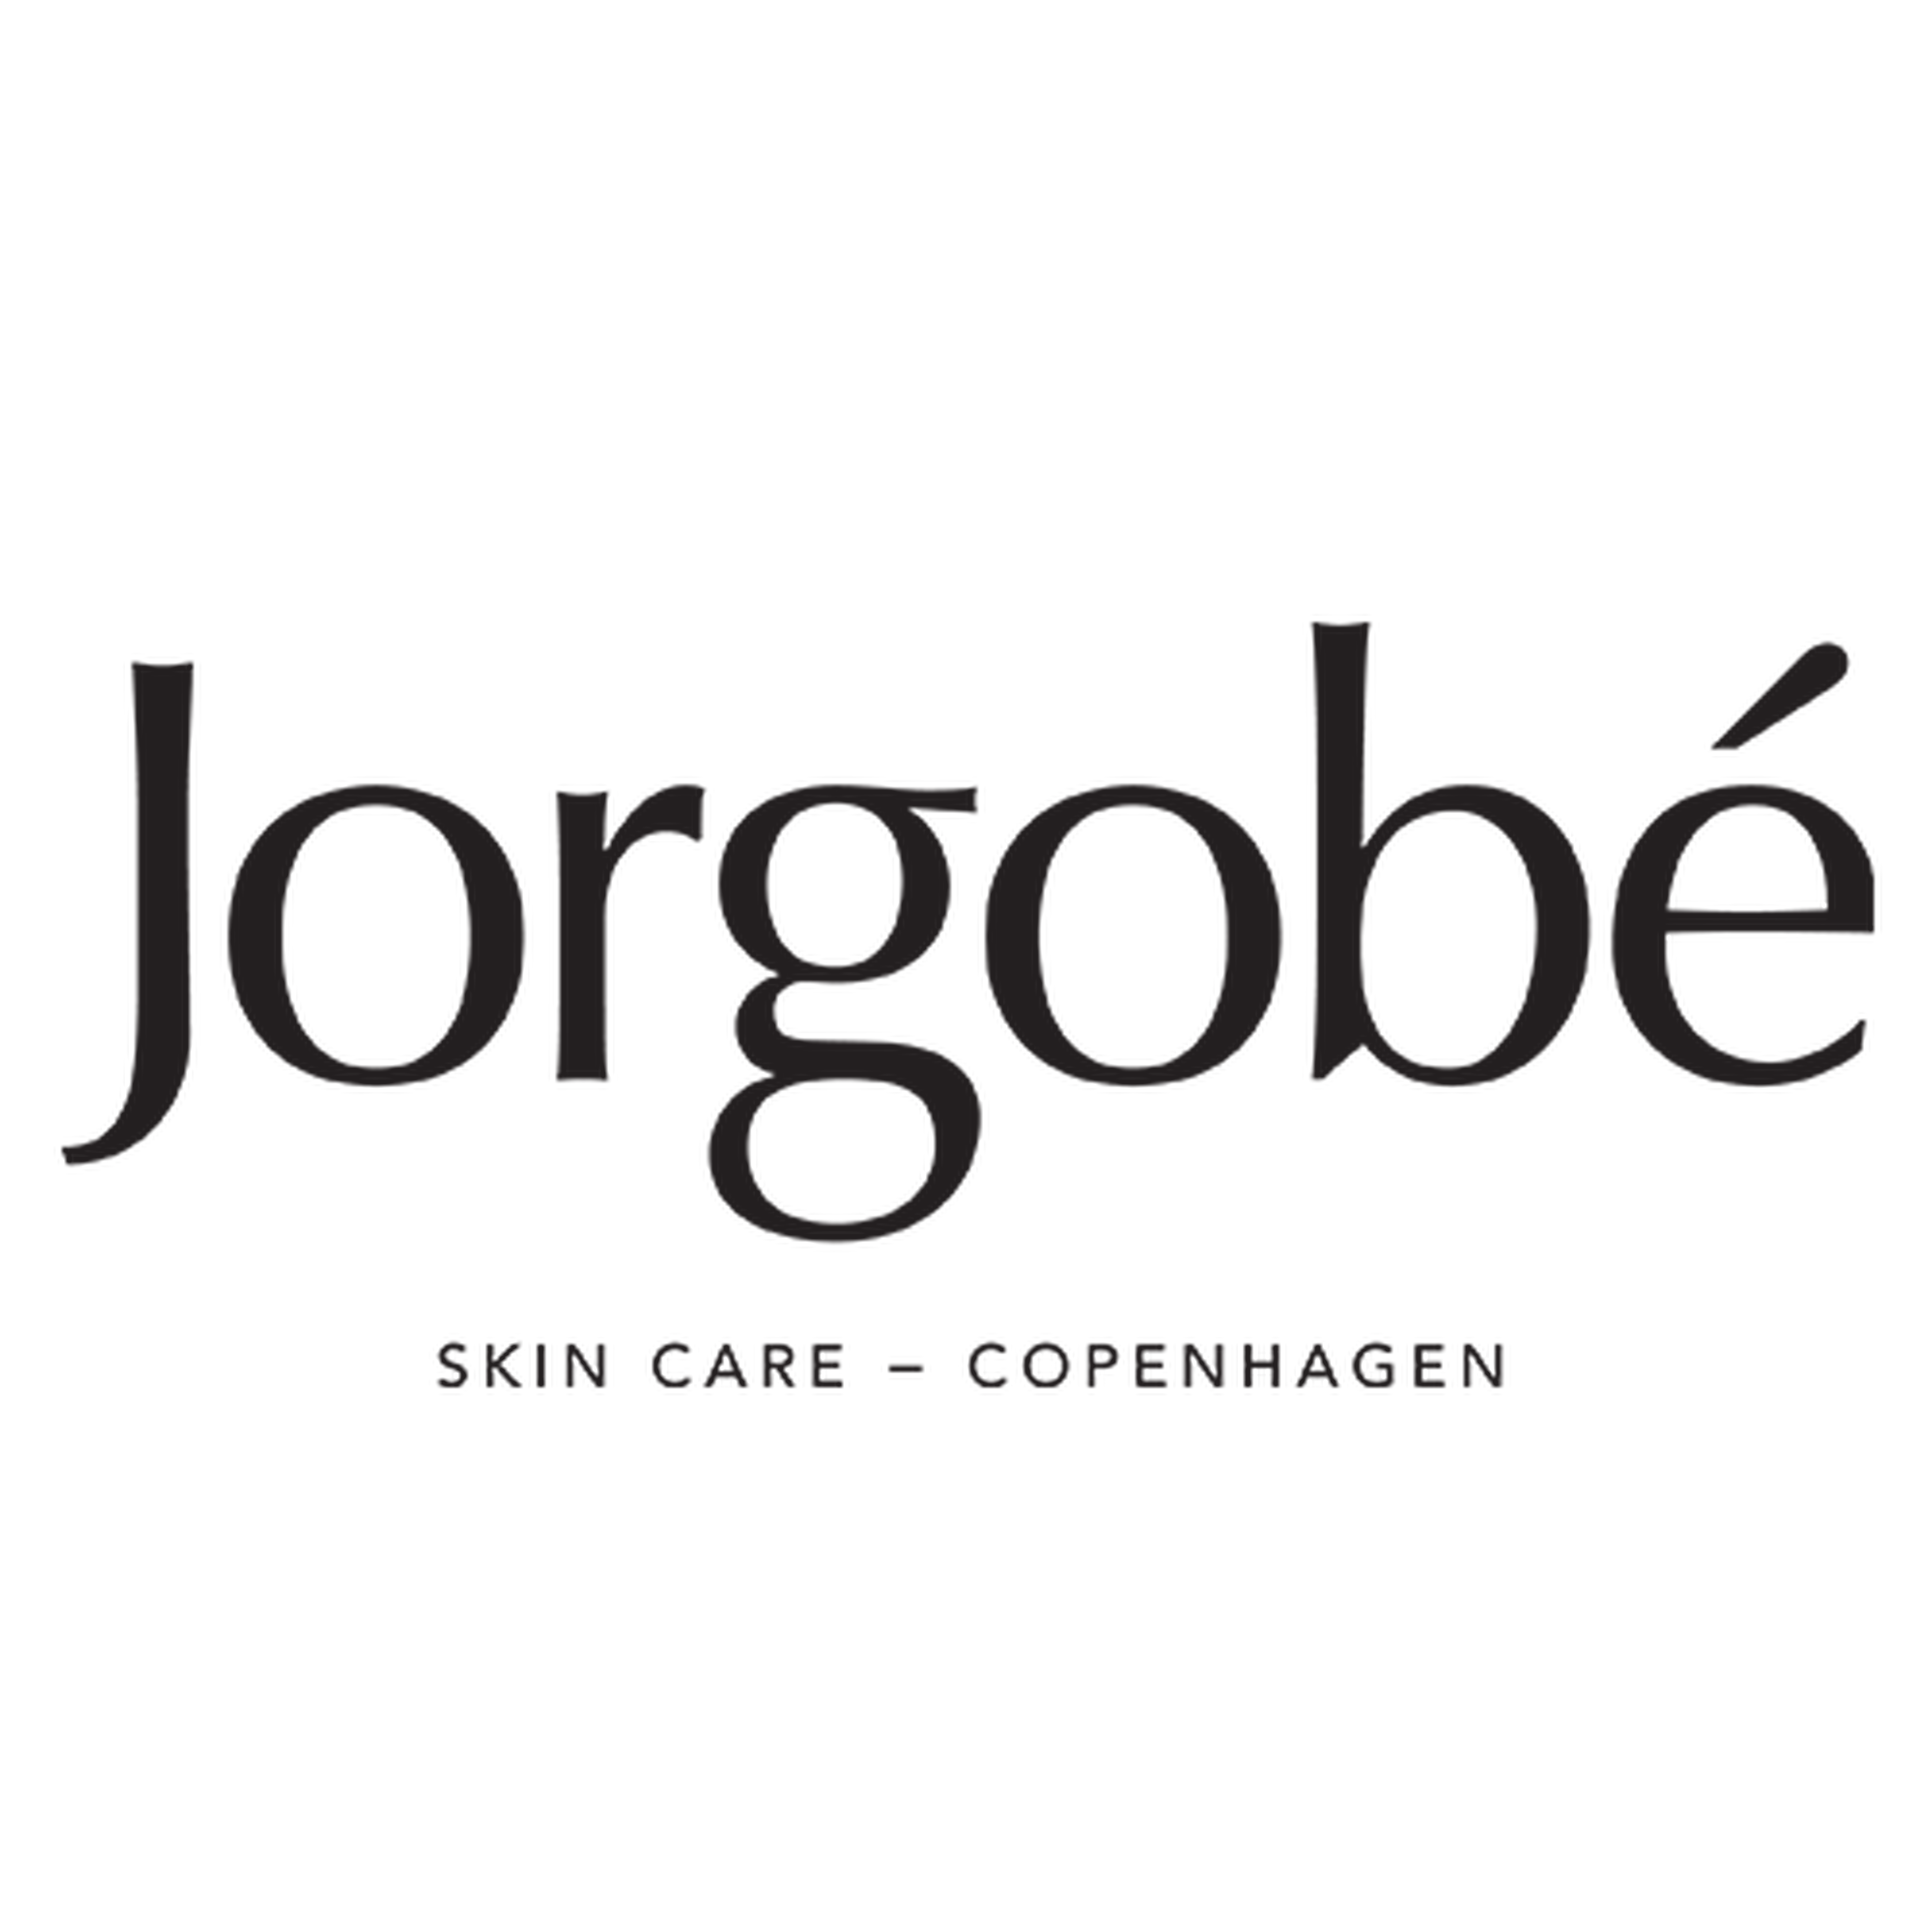 Jorgobé logotype